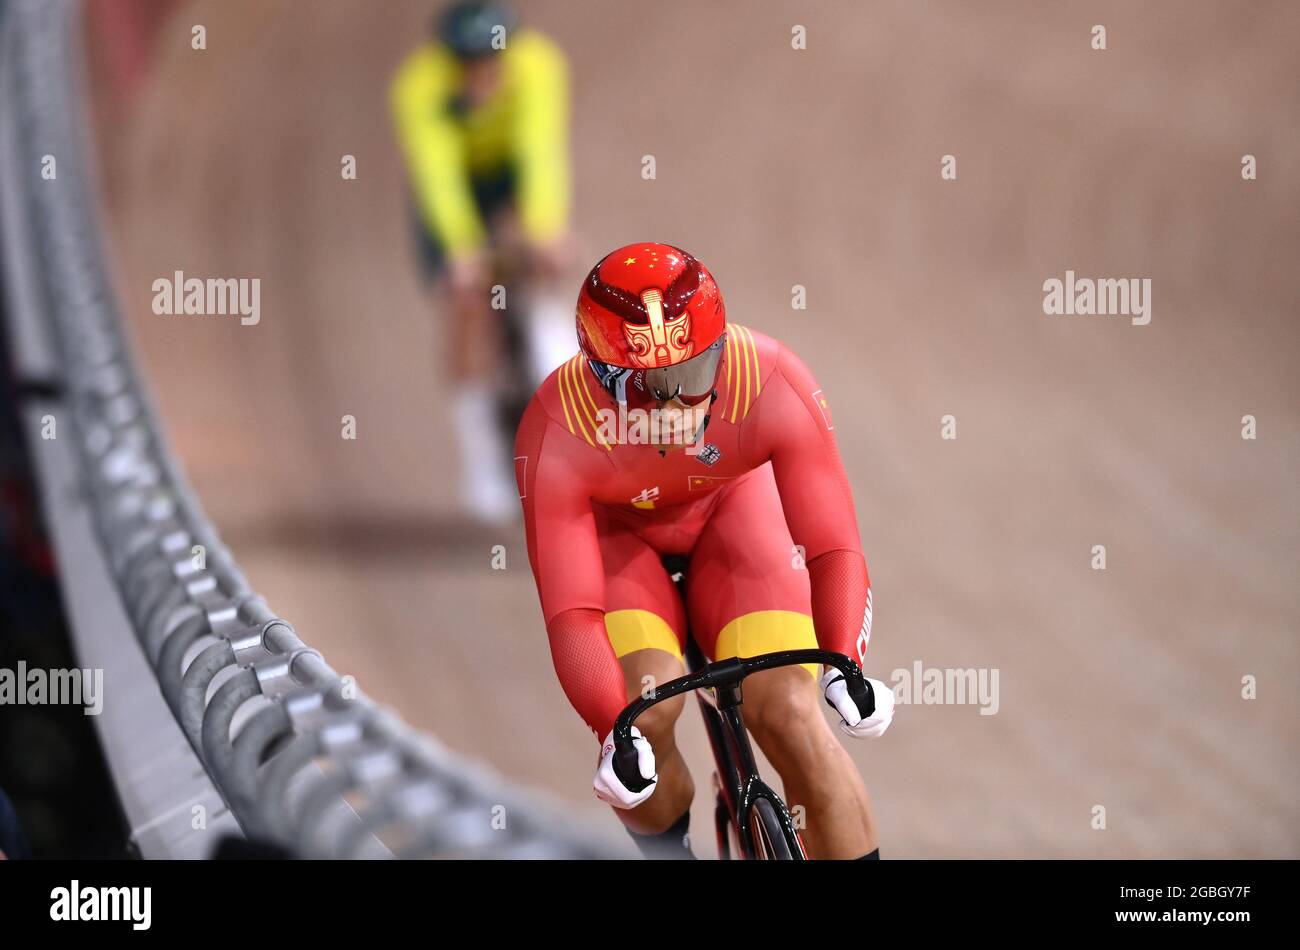 (210804) --IZU, Aug. 4, 2021 (Xinhua) -- Xu Chao of China competes during cycling track men's sprint match at Tokyo 2020 Olympic Games, in Izu, Japan, Aug. 4, 2021. (Xinhua/Zhang Hongxiang) Stock Photo